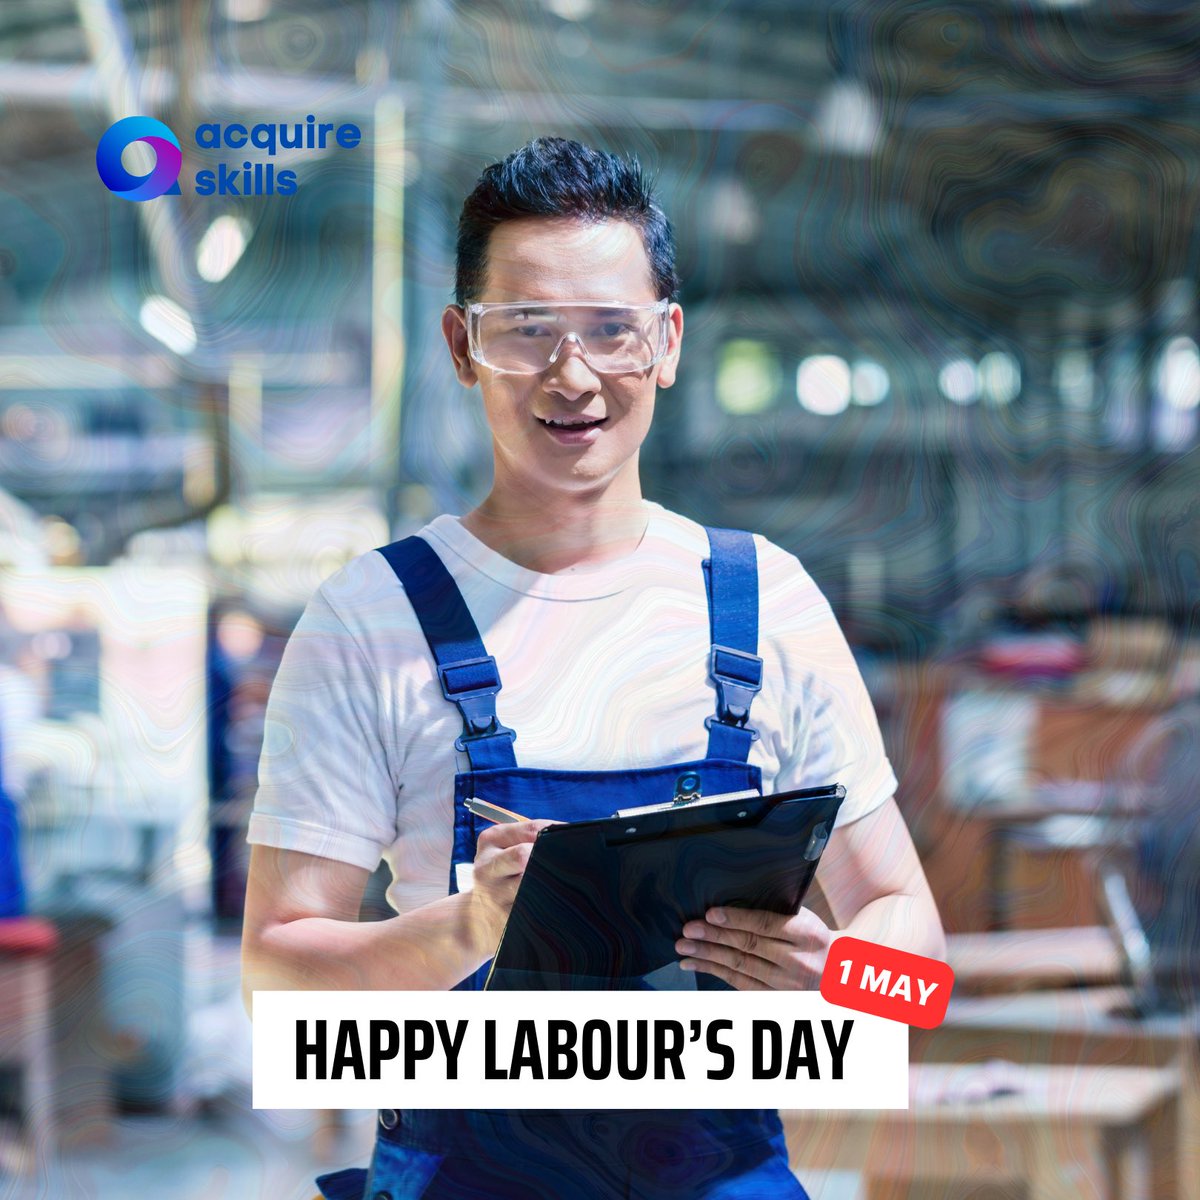 Happy Labour’s Day.
Keep the spirit high!

#labourday2024
#skillsmatter
#acquireskillsmalaysia